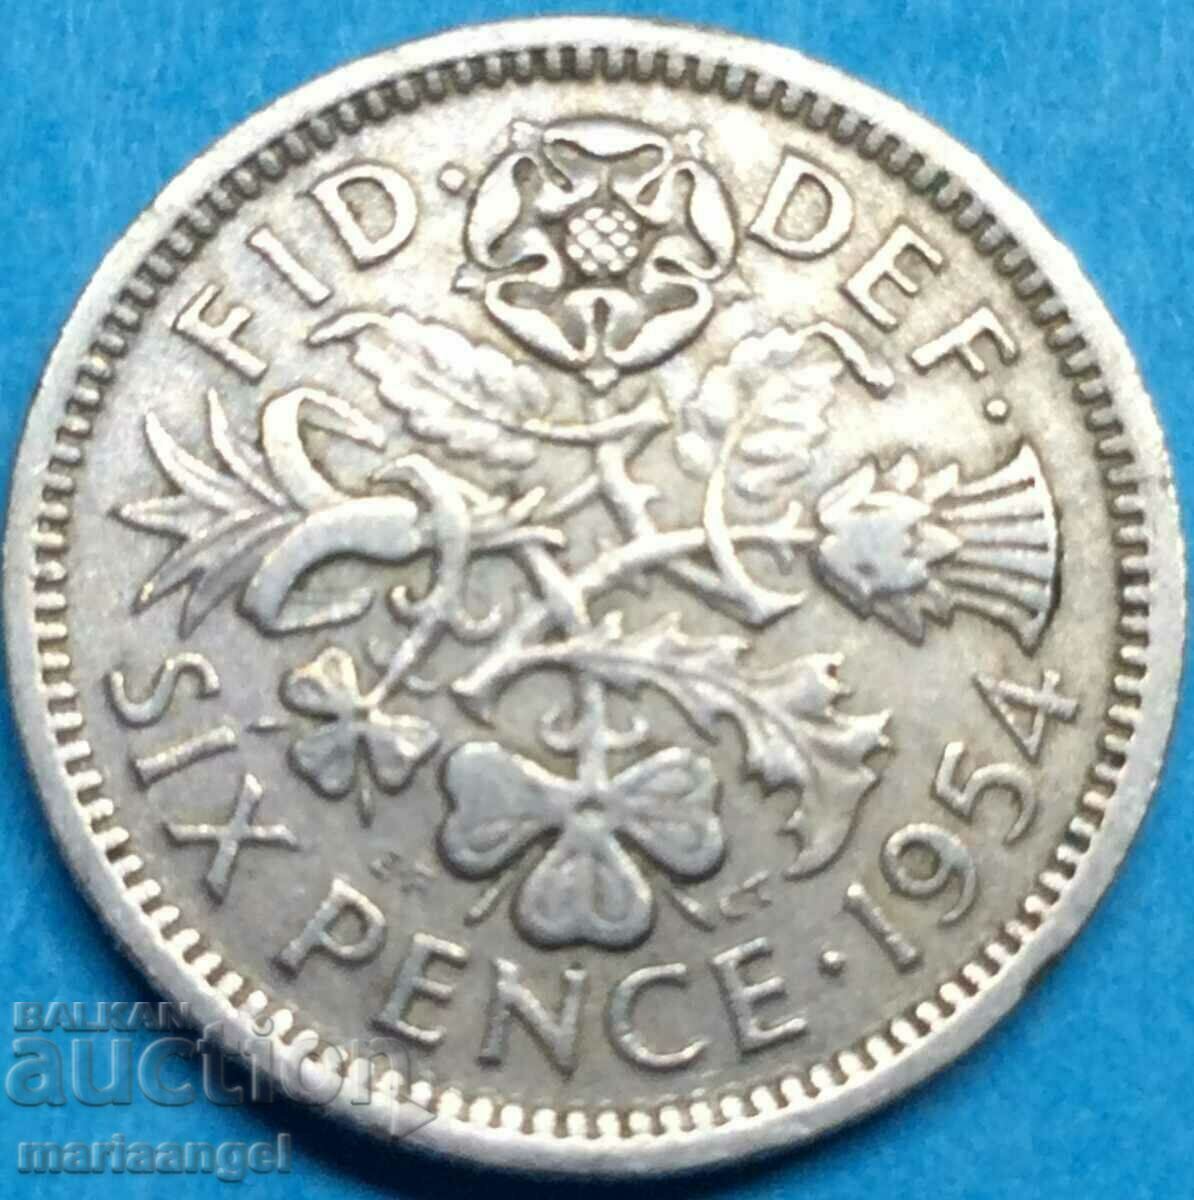 Great Britain 6 pence 1954